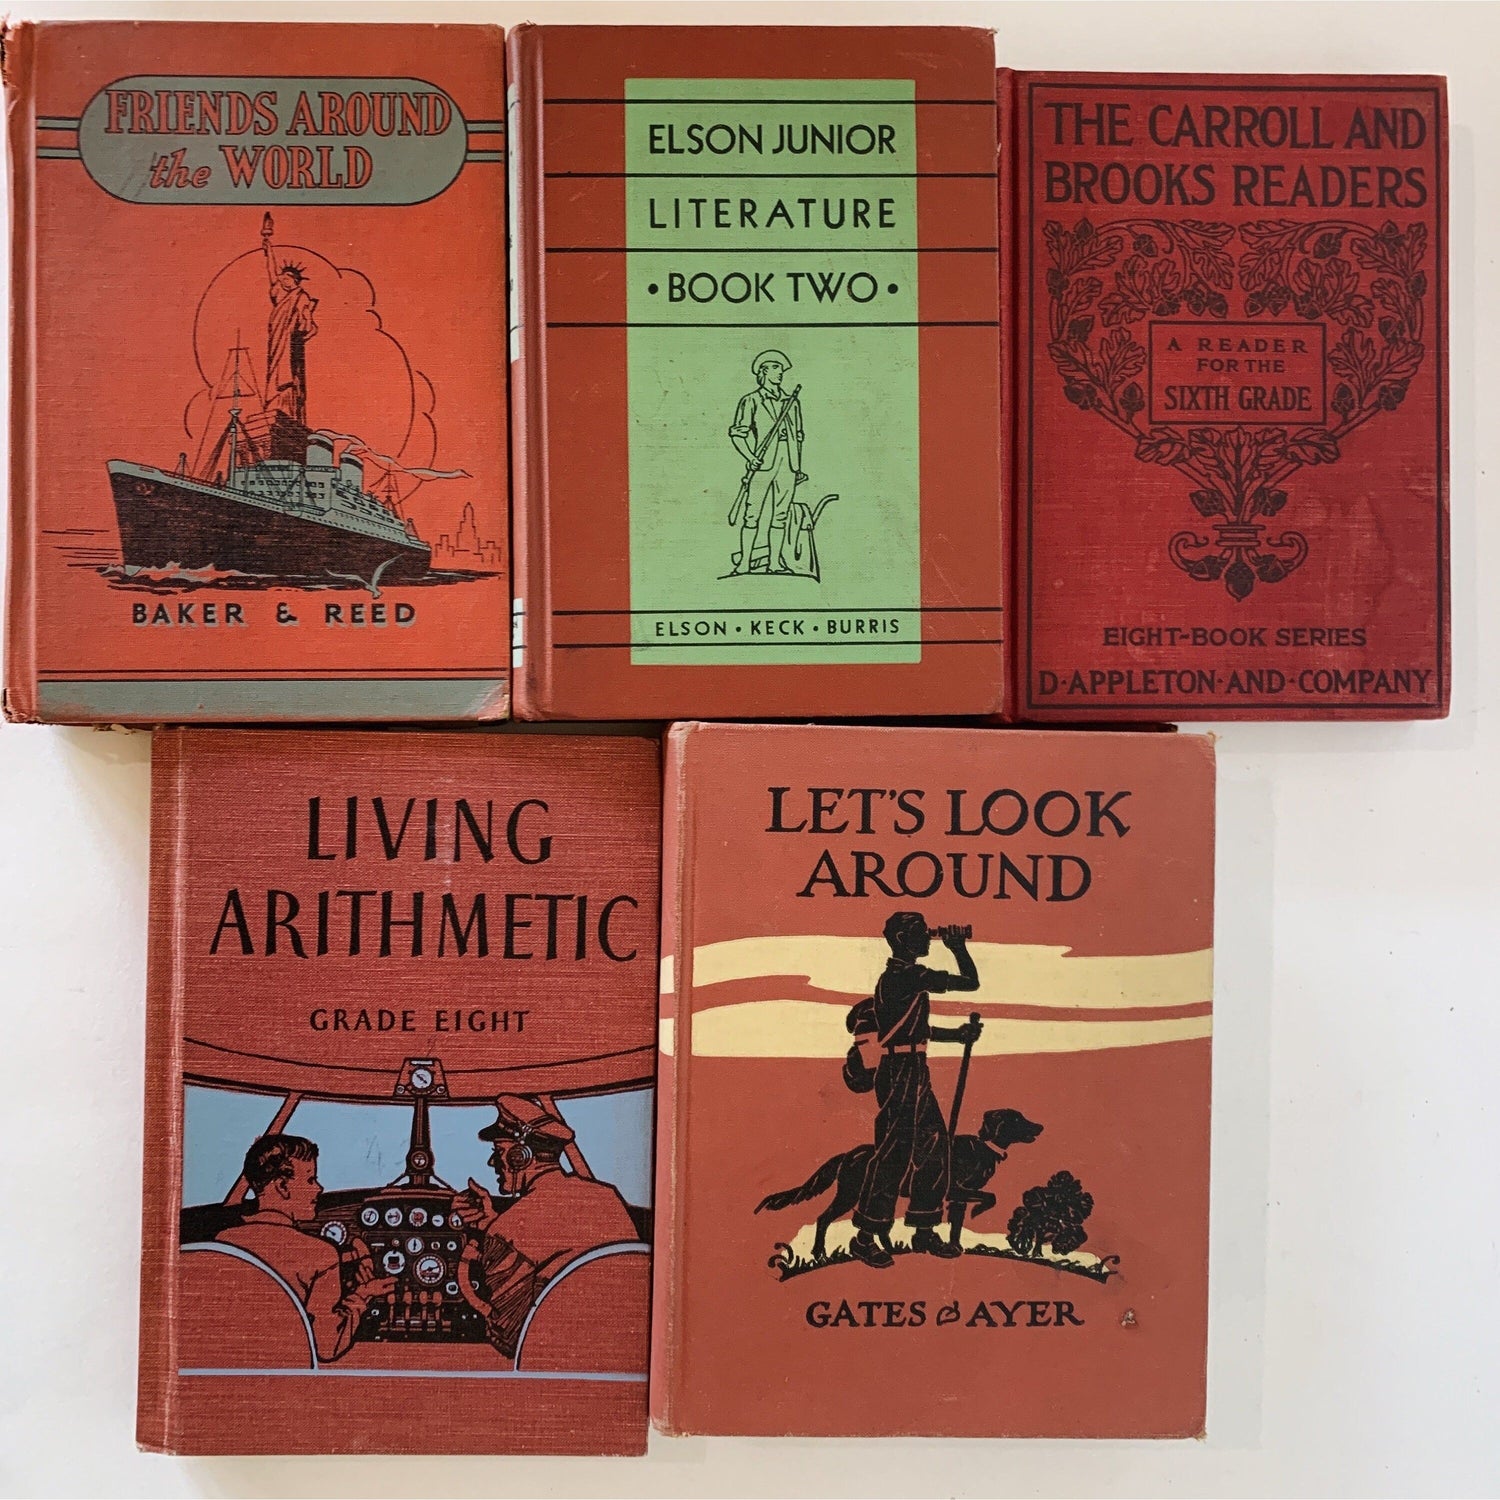 Vintage Cinnamon Red School Books, Classroom Decor Bookshelf Styling